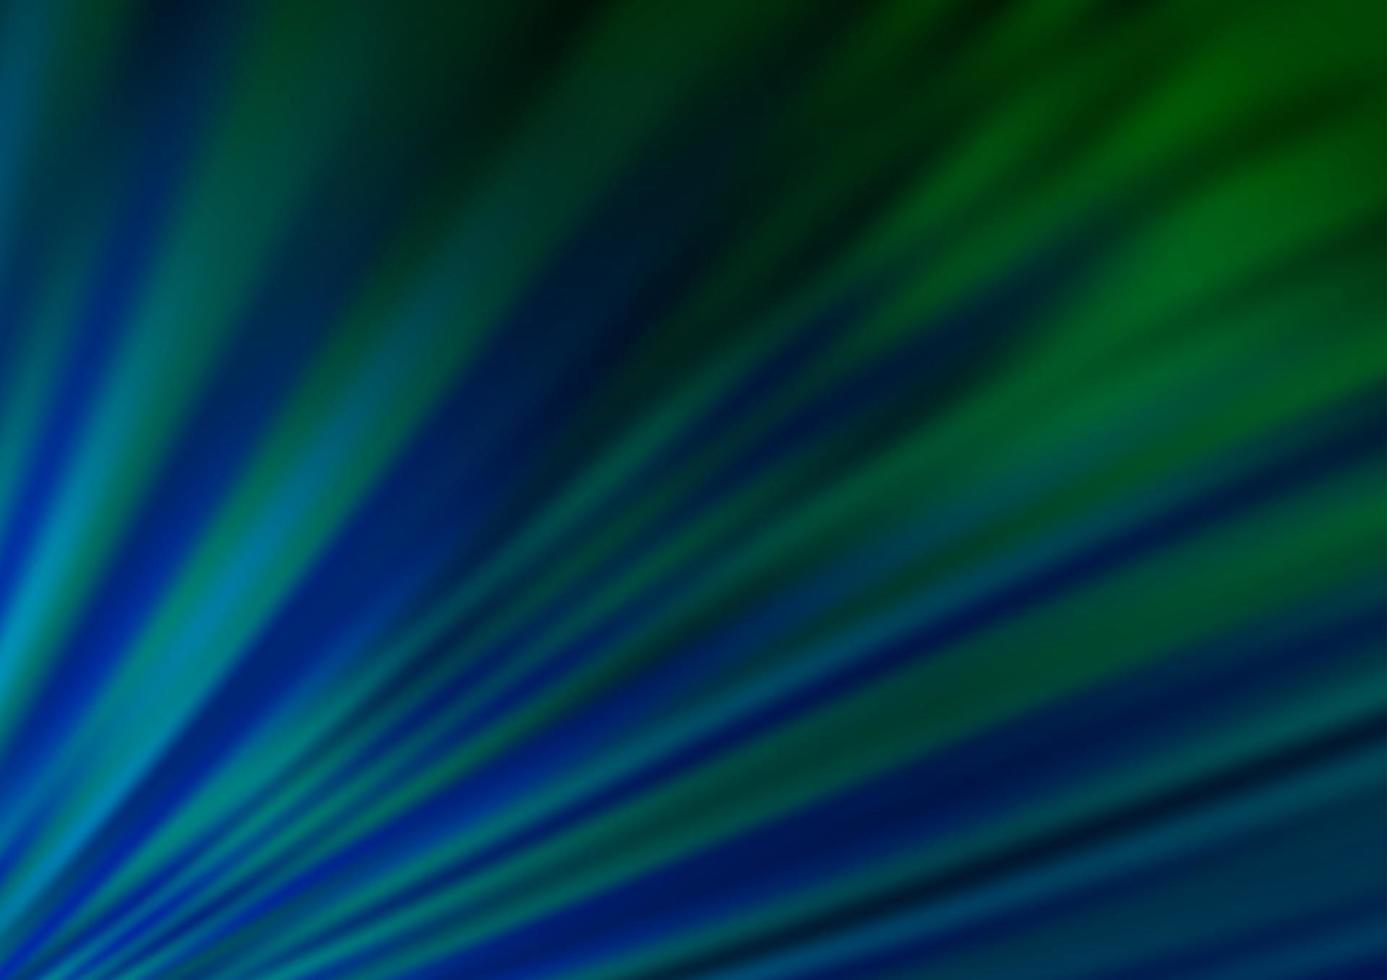 donkerblauwe, groene vector abstract onscherpe achtergrond.